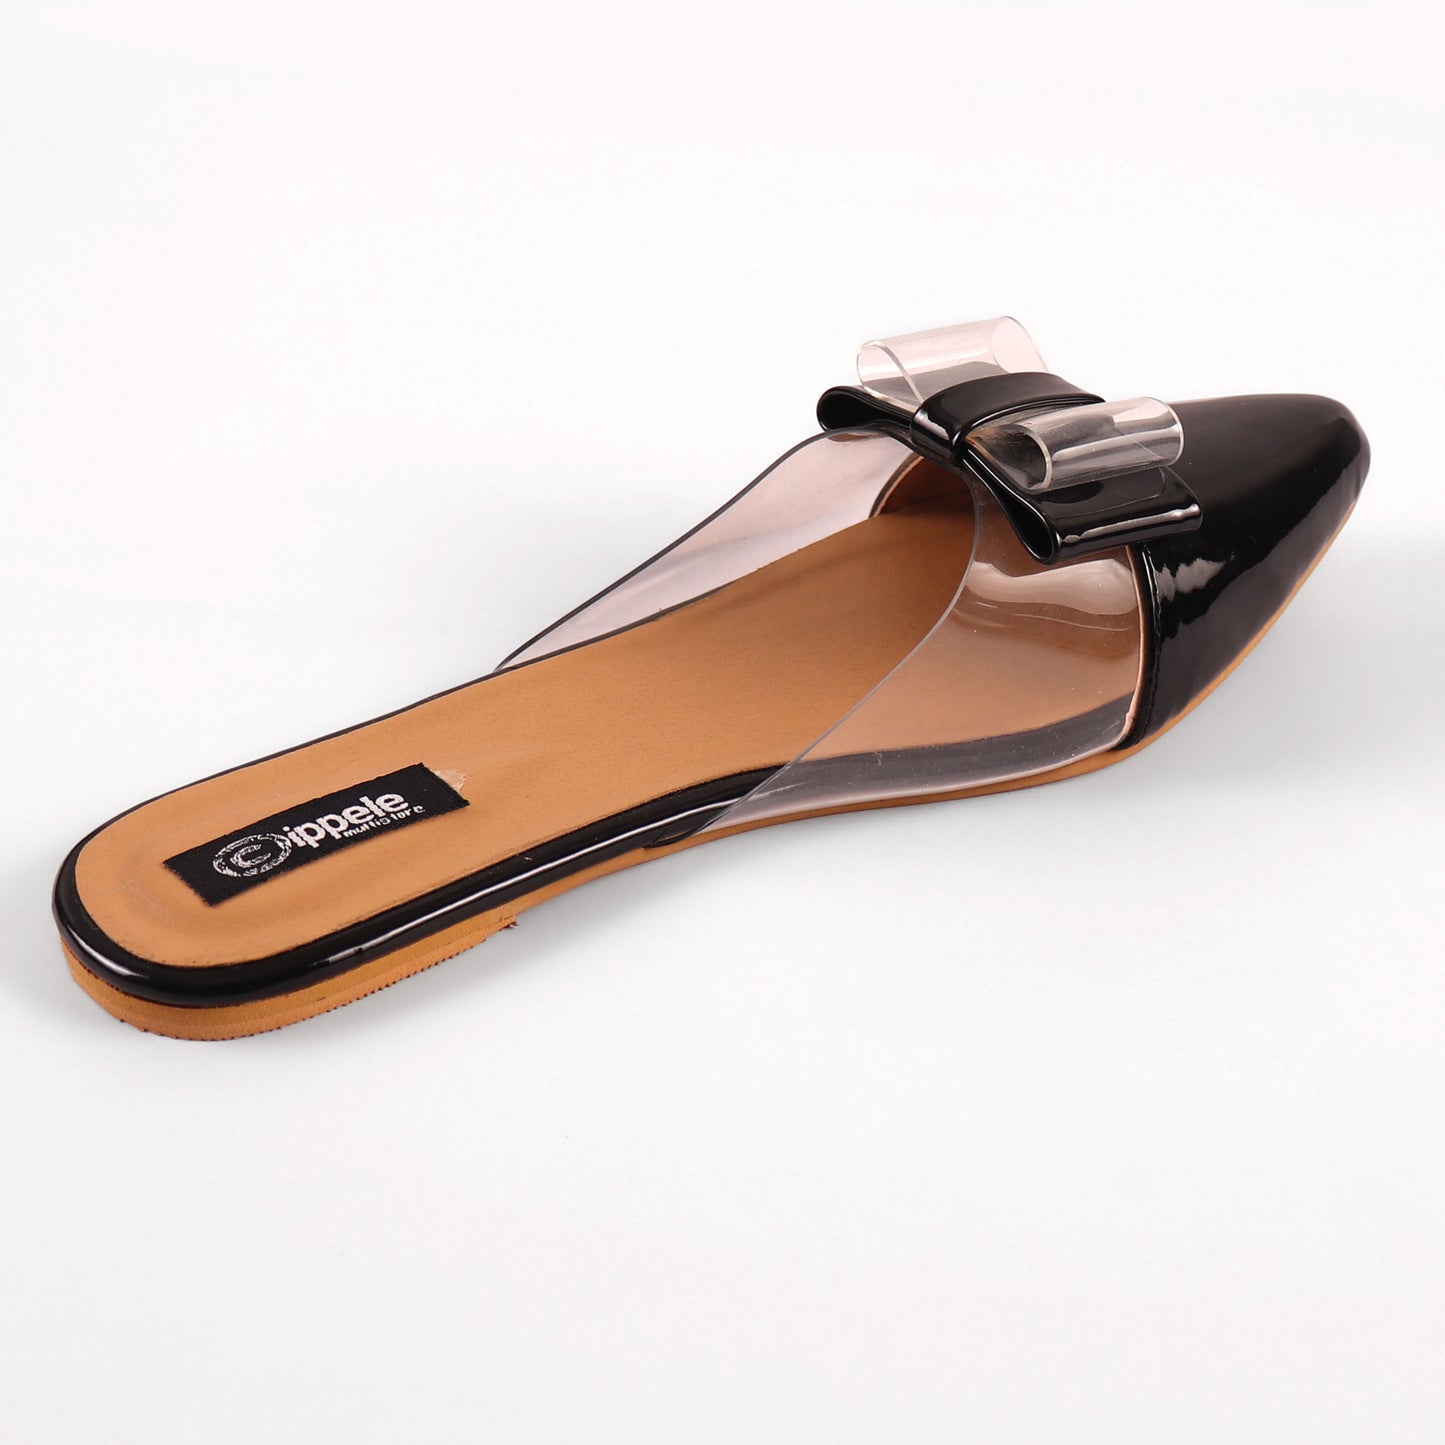 Foot Wear,The Finska Cookie Ribbon Mules in Black - Cippele Multi Store